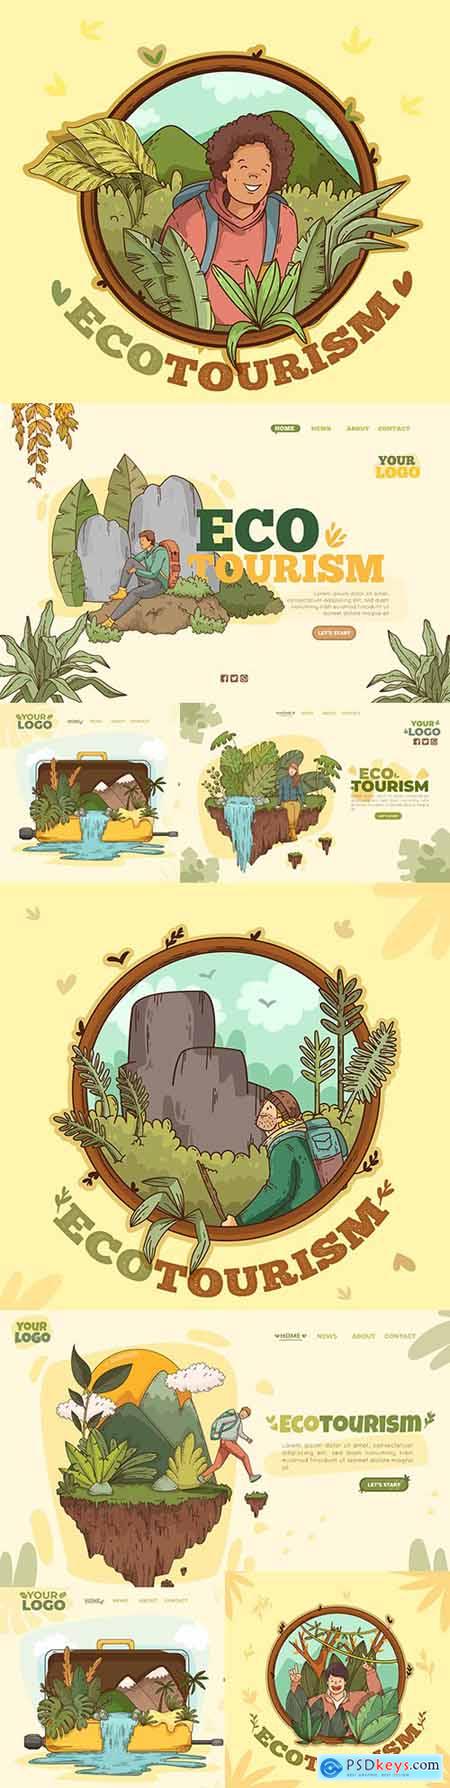 Eco tourism template landing page design